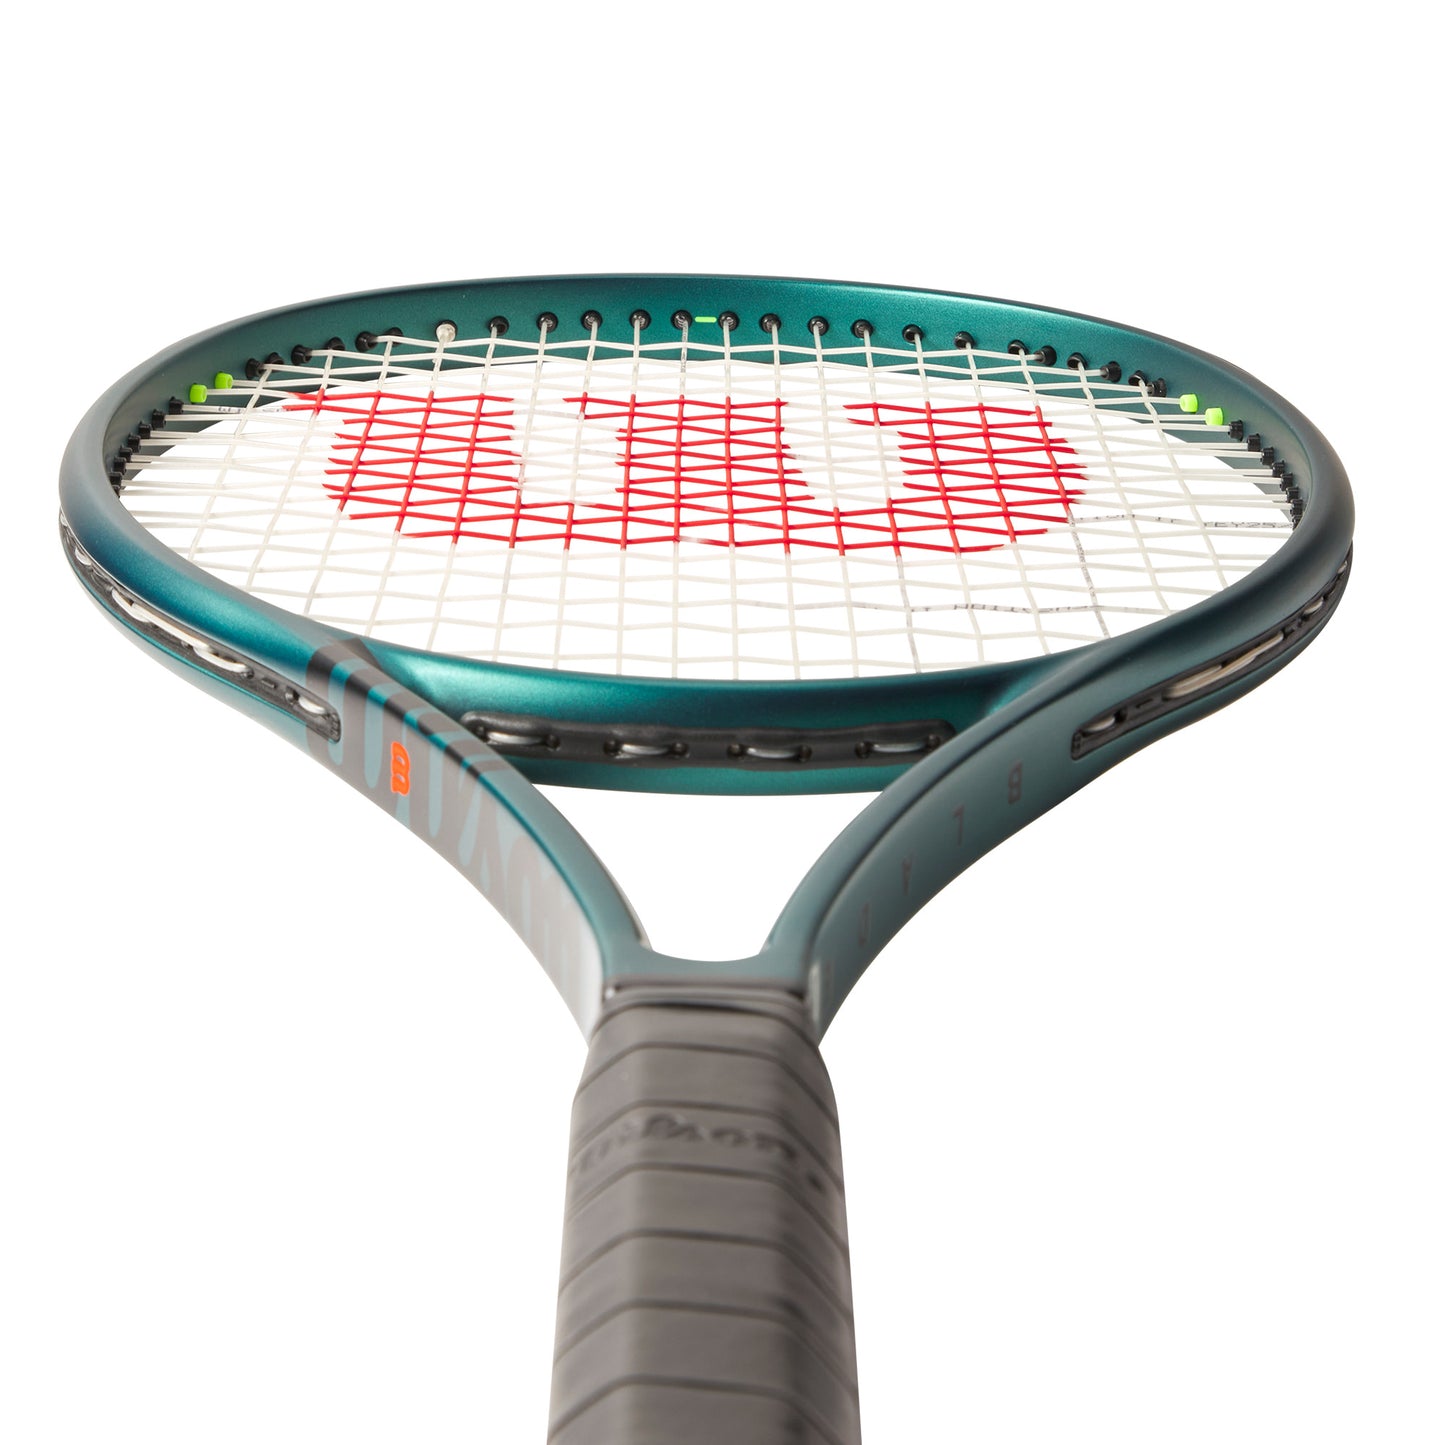 Blade 98 V9 Tennis Racket Frame